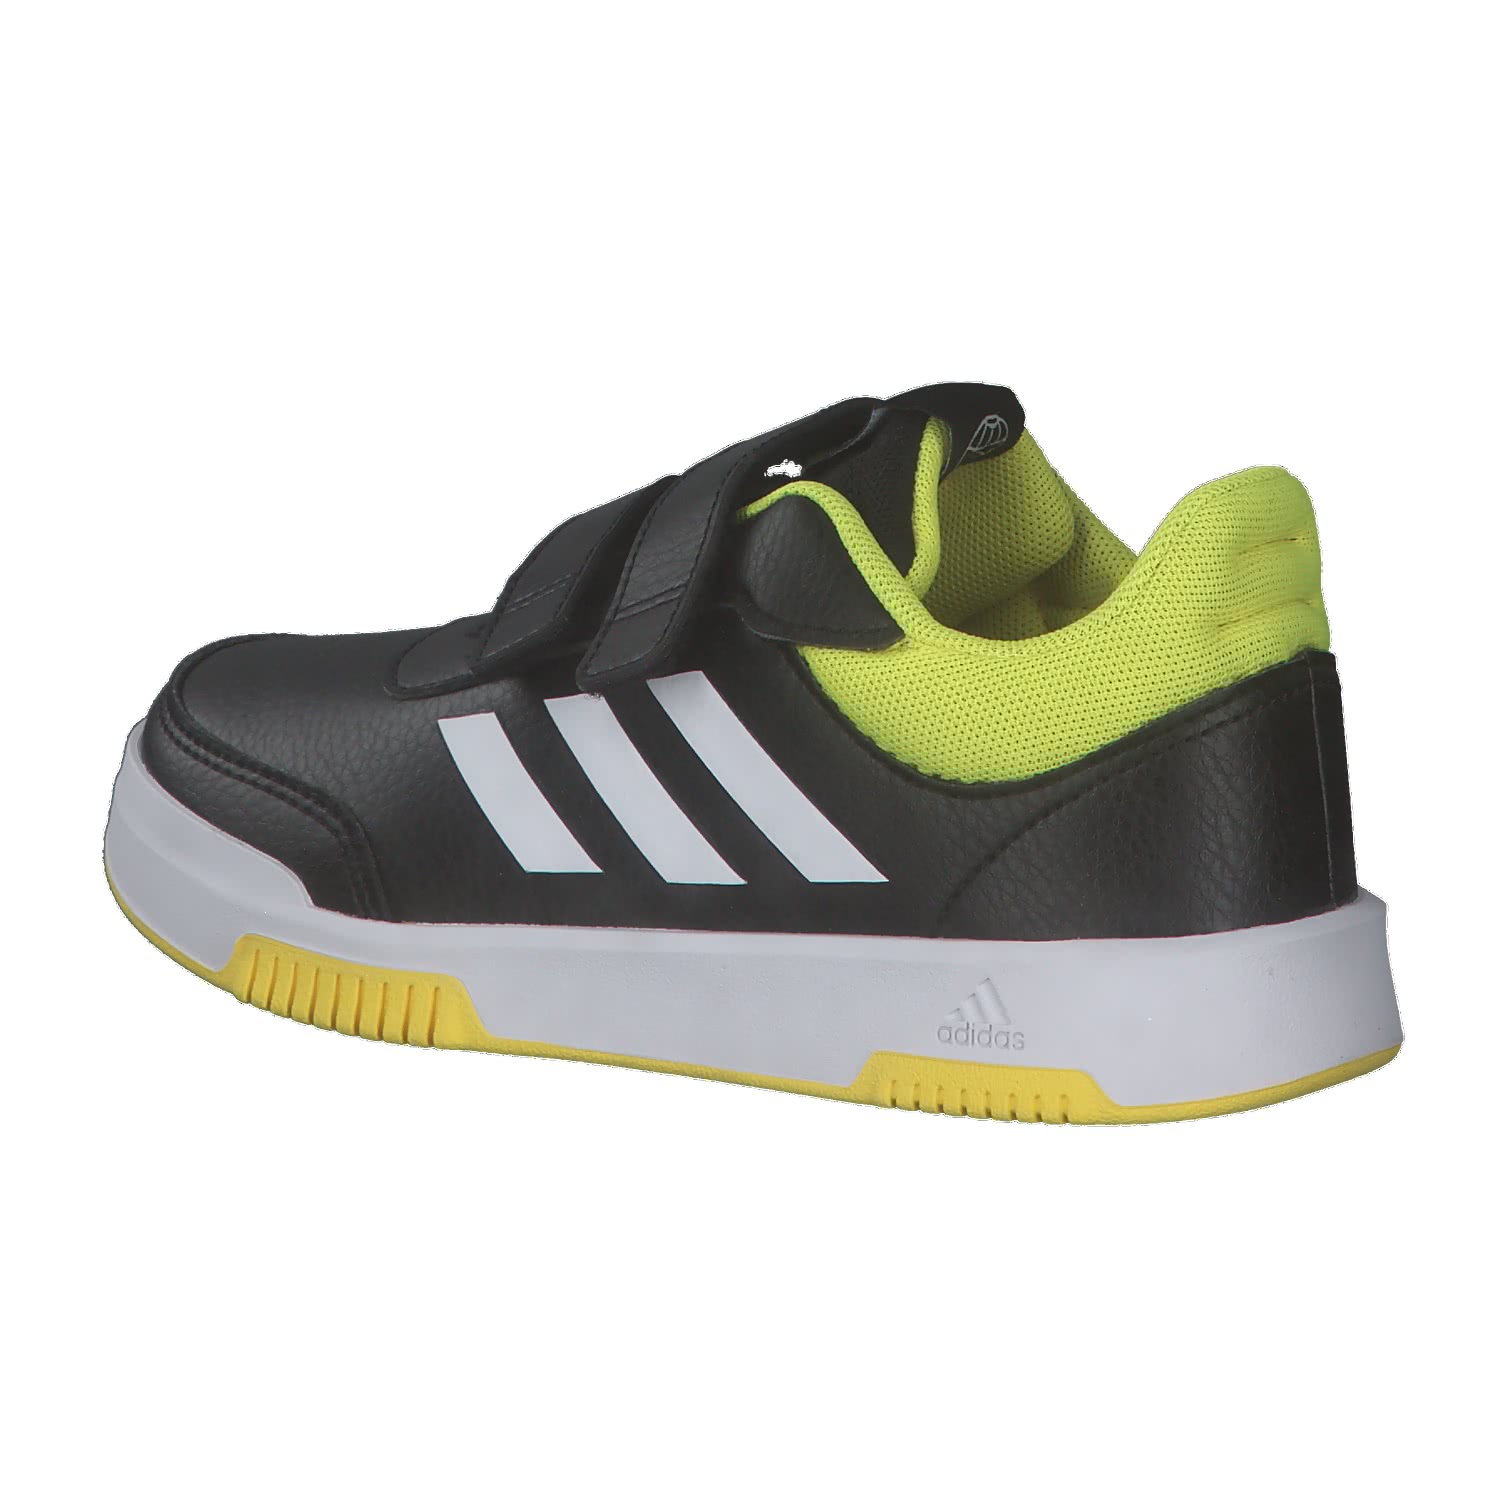 adidas sneaker tensaur sport CF | eBay